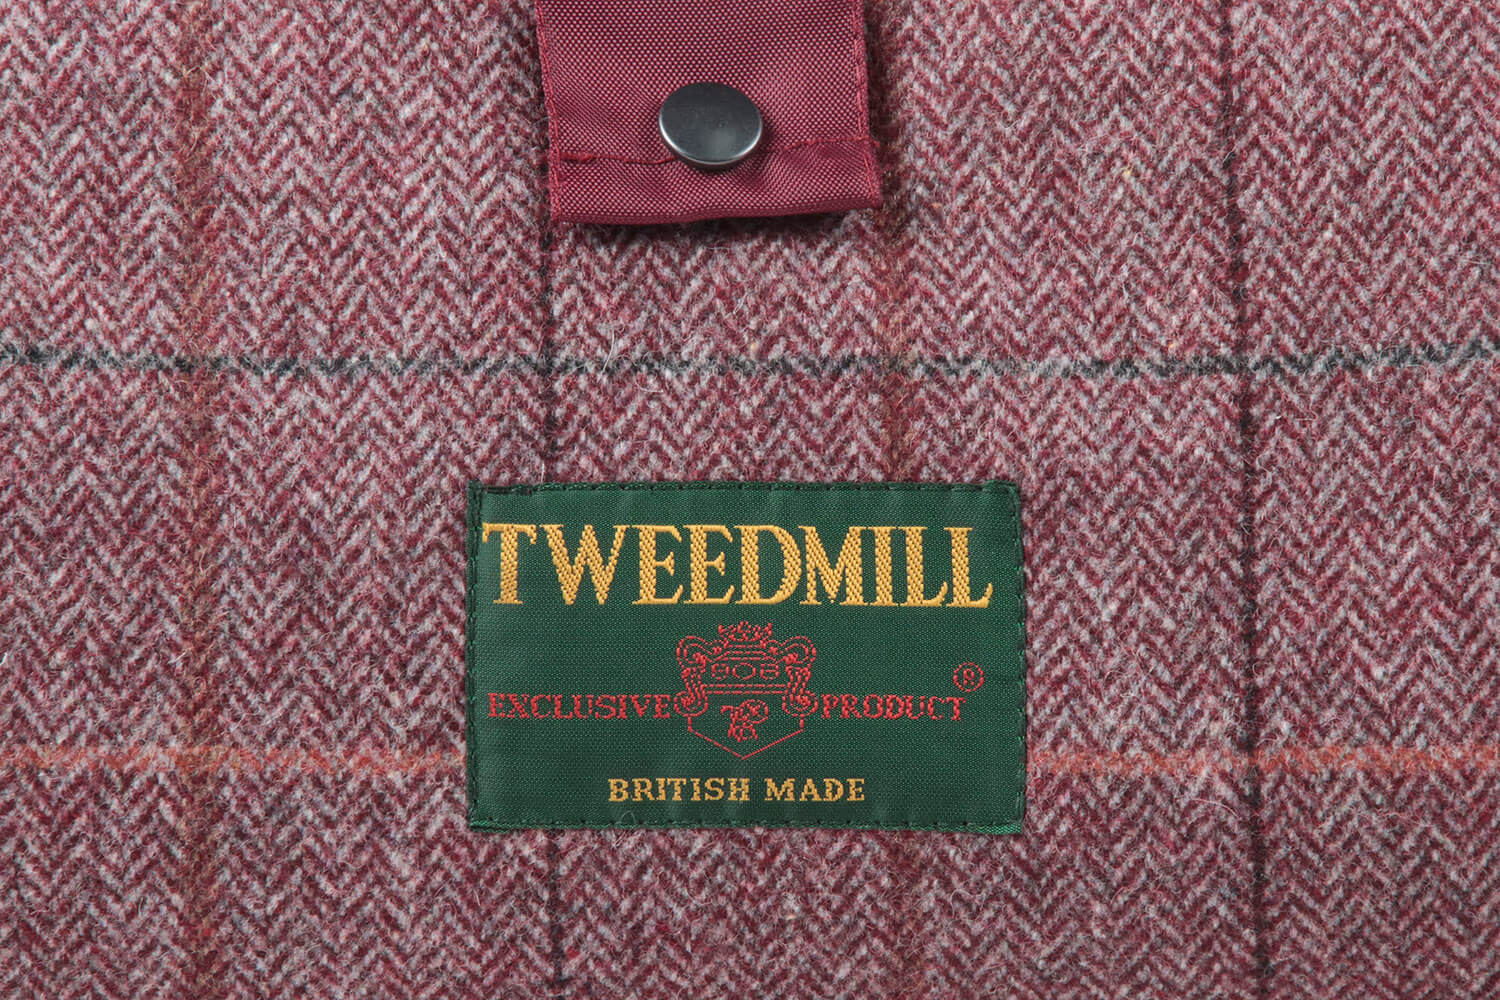 Tweedmill-Picknickkleed-Tasje-Wol-Tweed-Rood-waterdicht